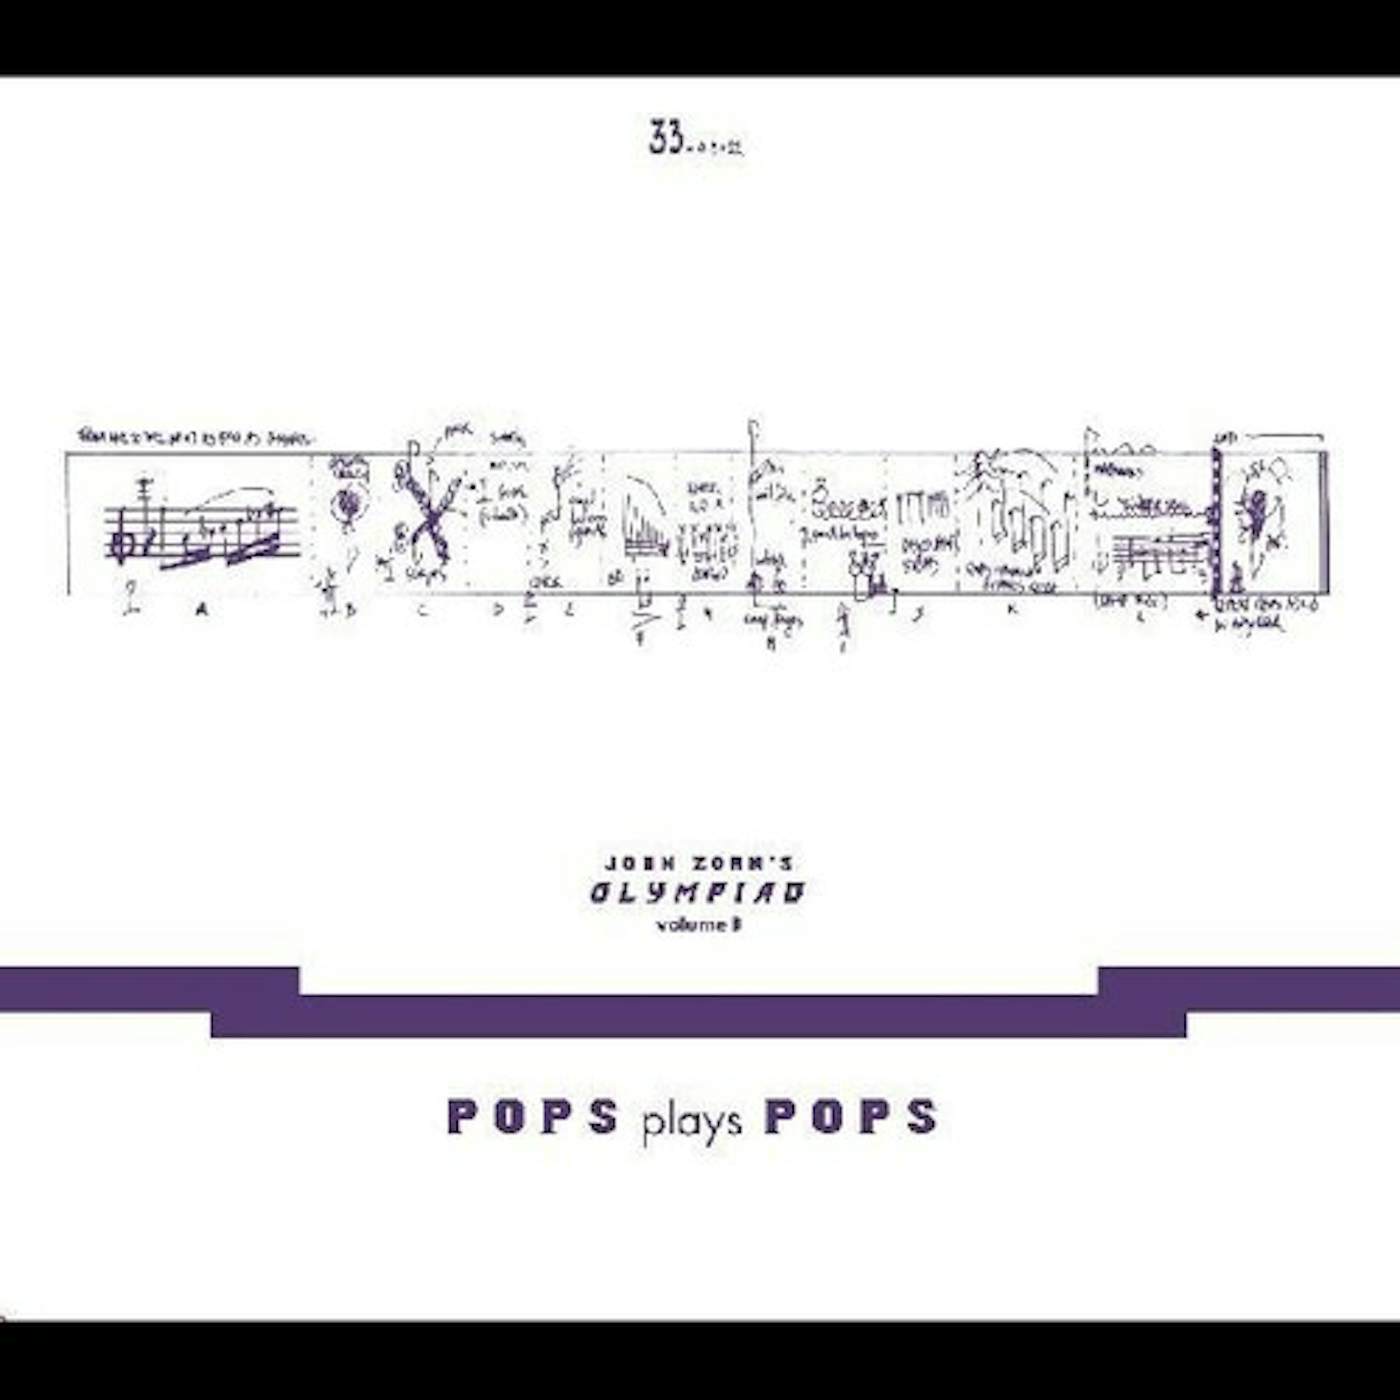 JOHN ZORNS OLYMPIAD VOL. 3 - POPS PLAYS POPS CD